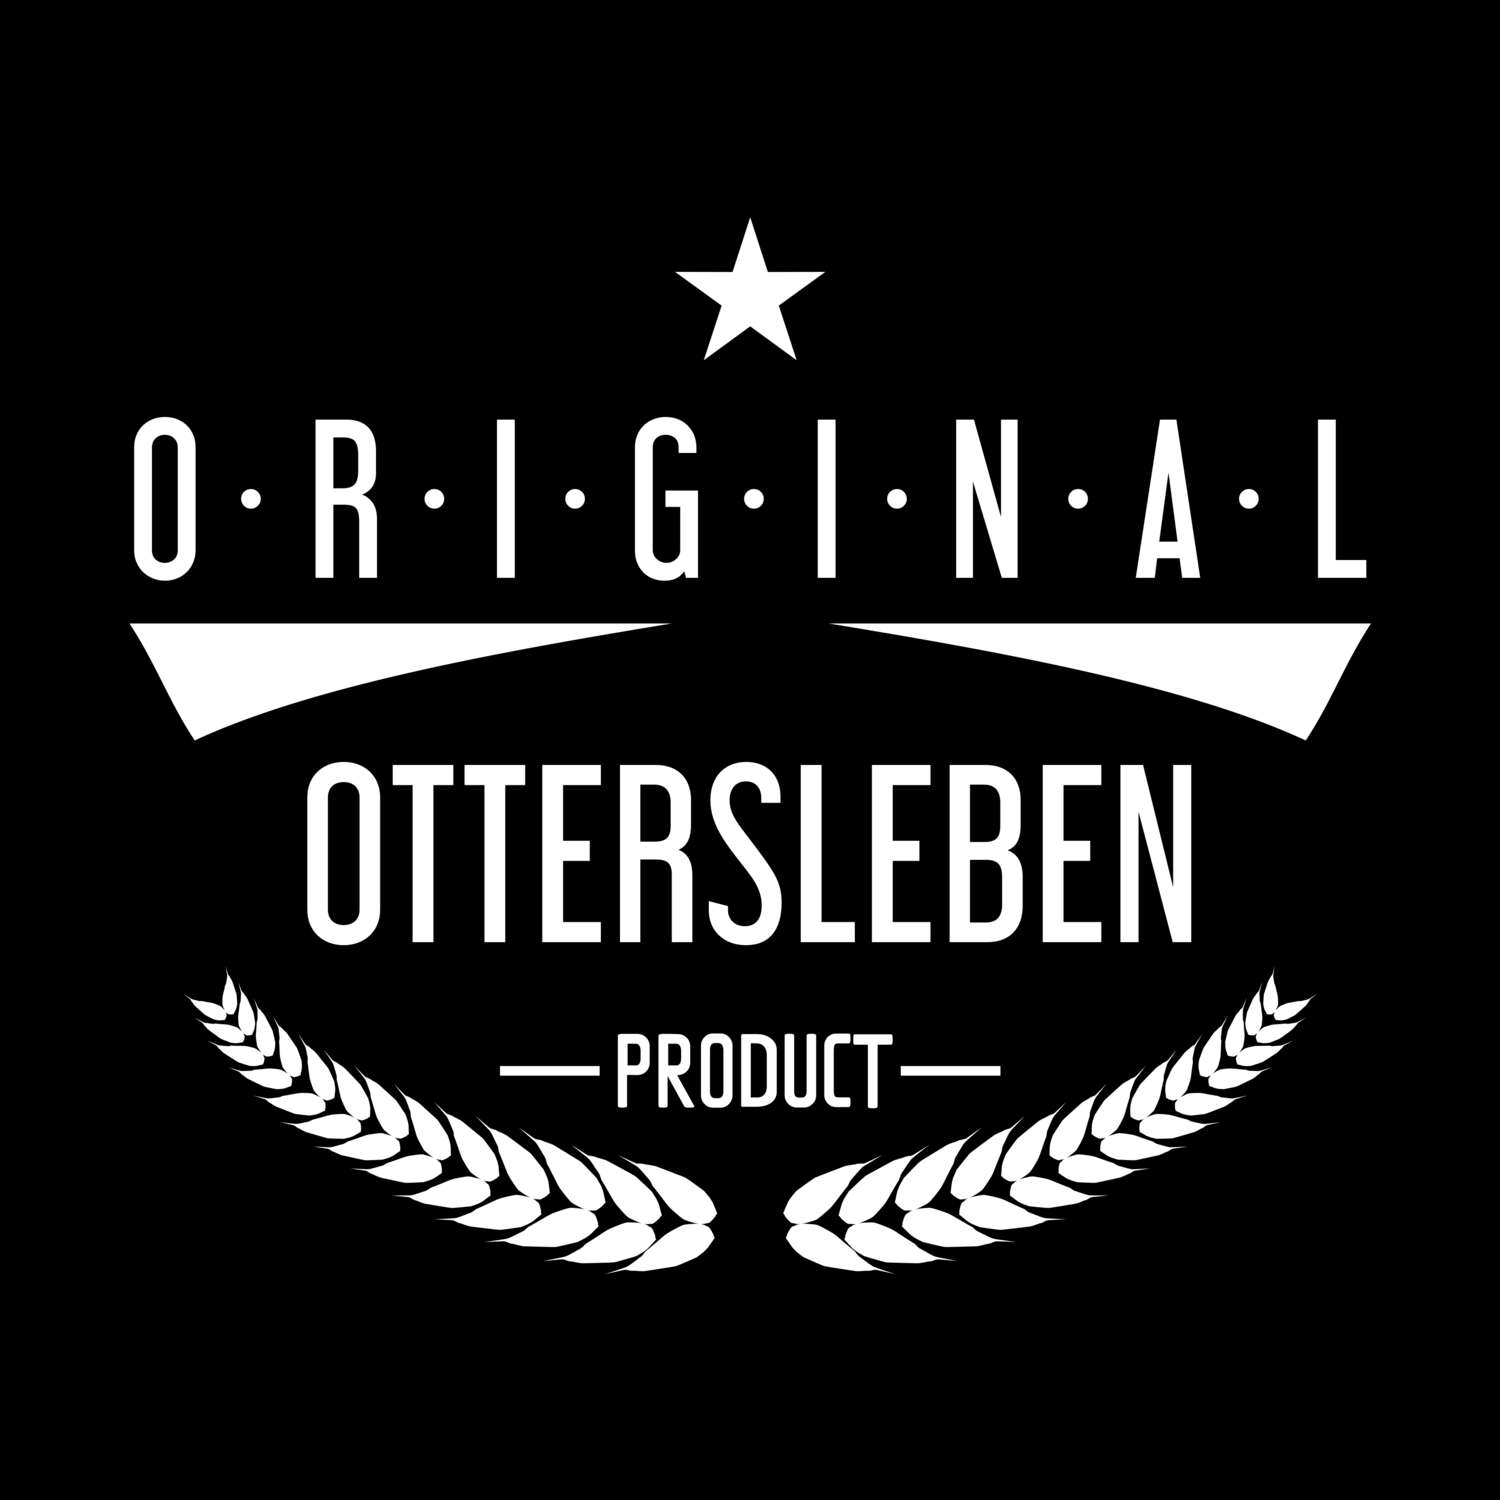 Ottersleben T-Shirt »Original Product«